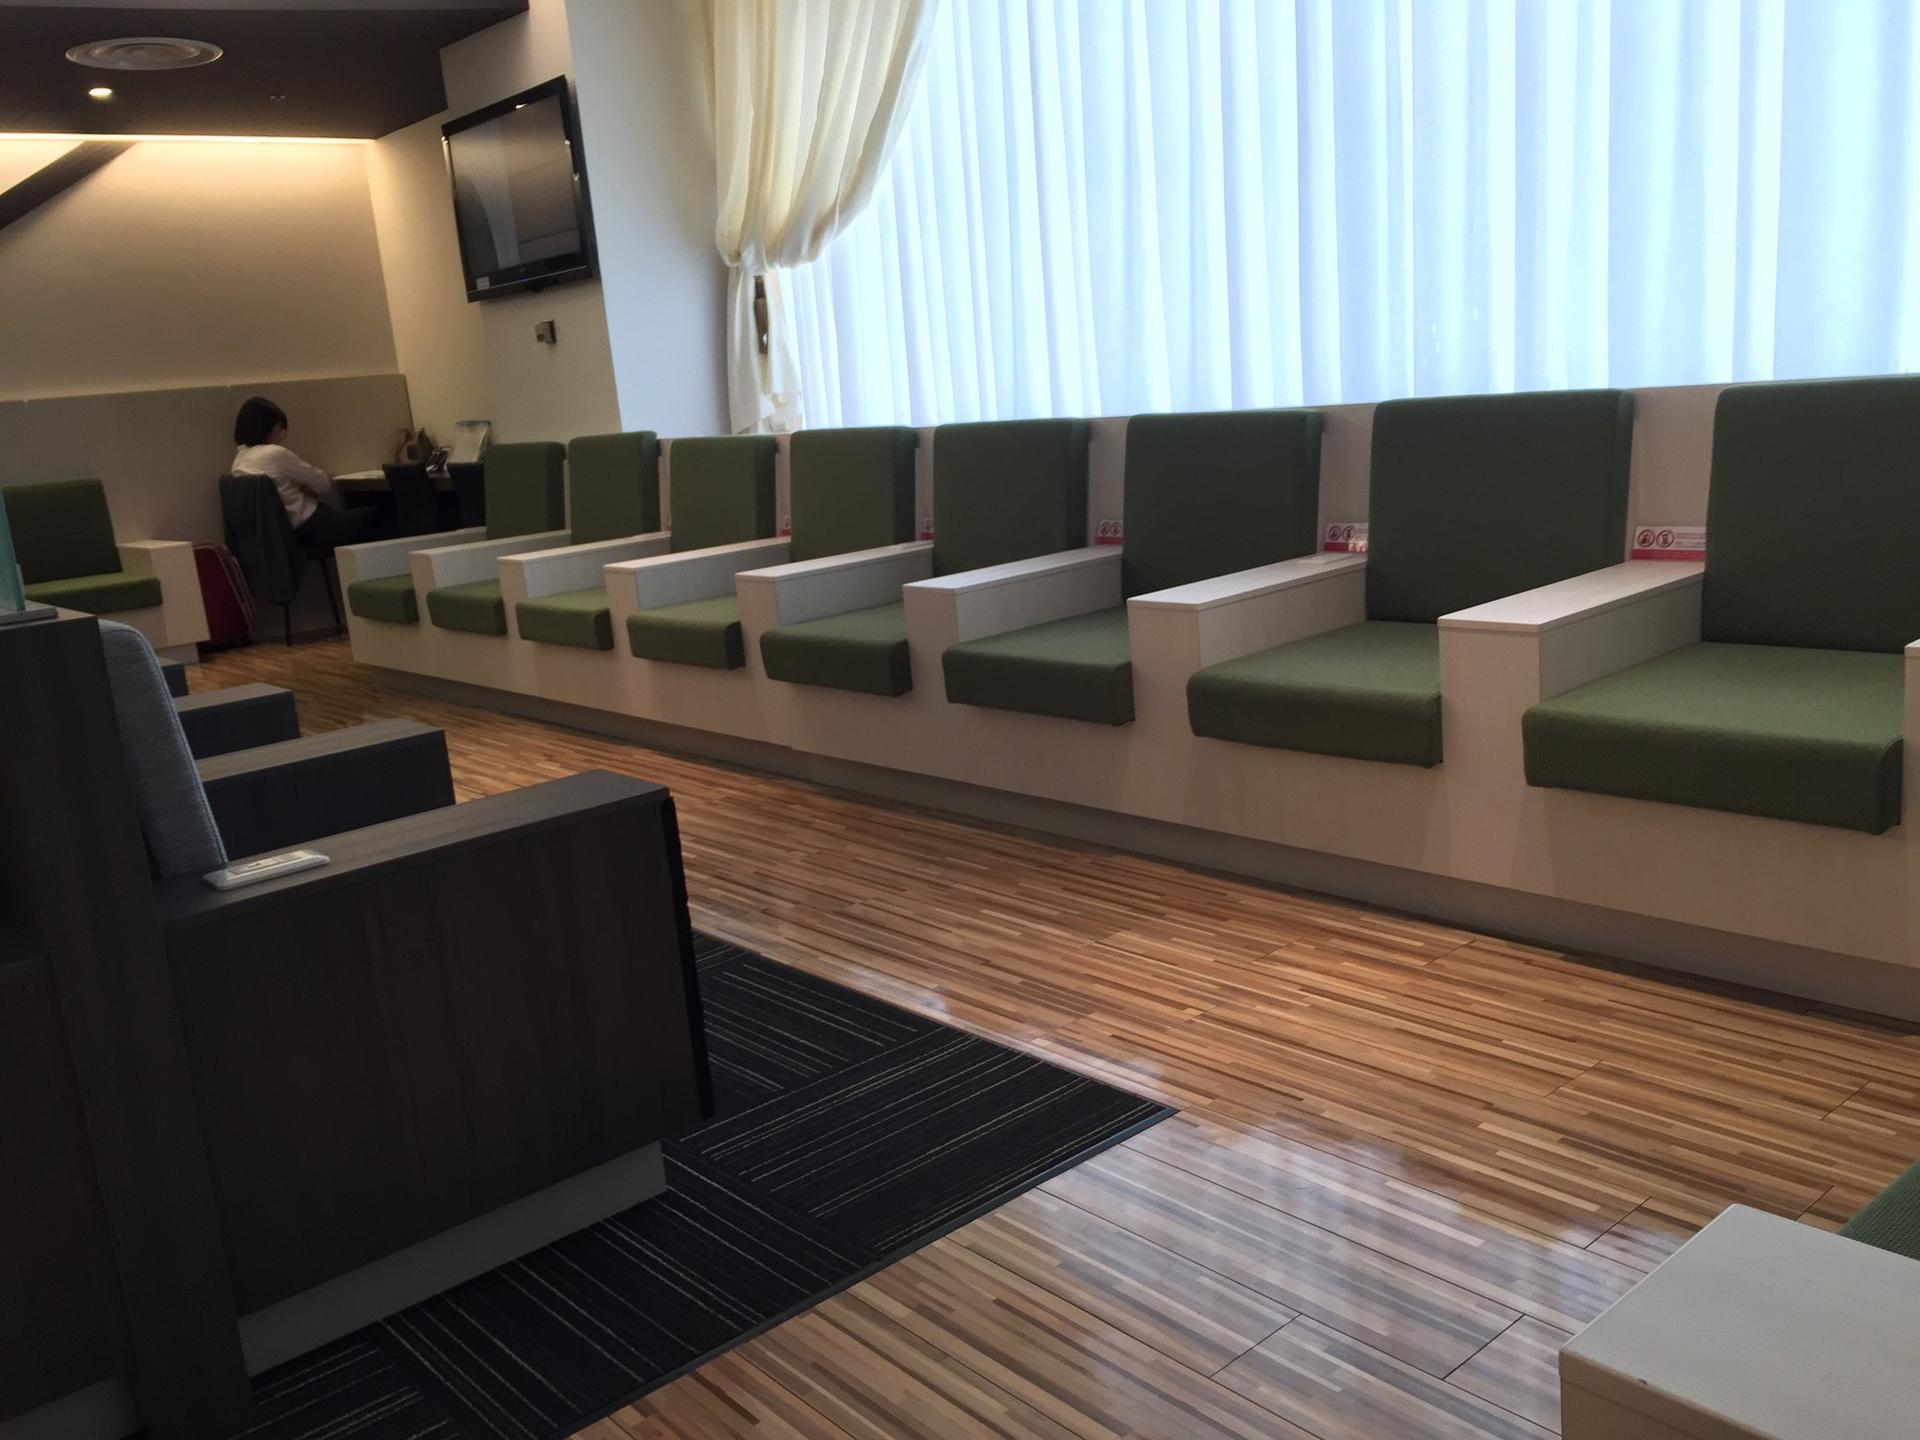 IASS Executive Lounge image 8 of 21